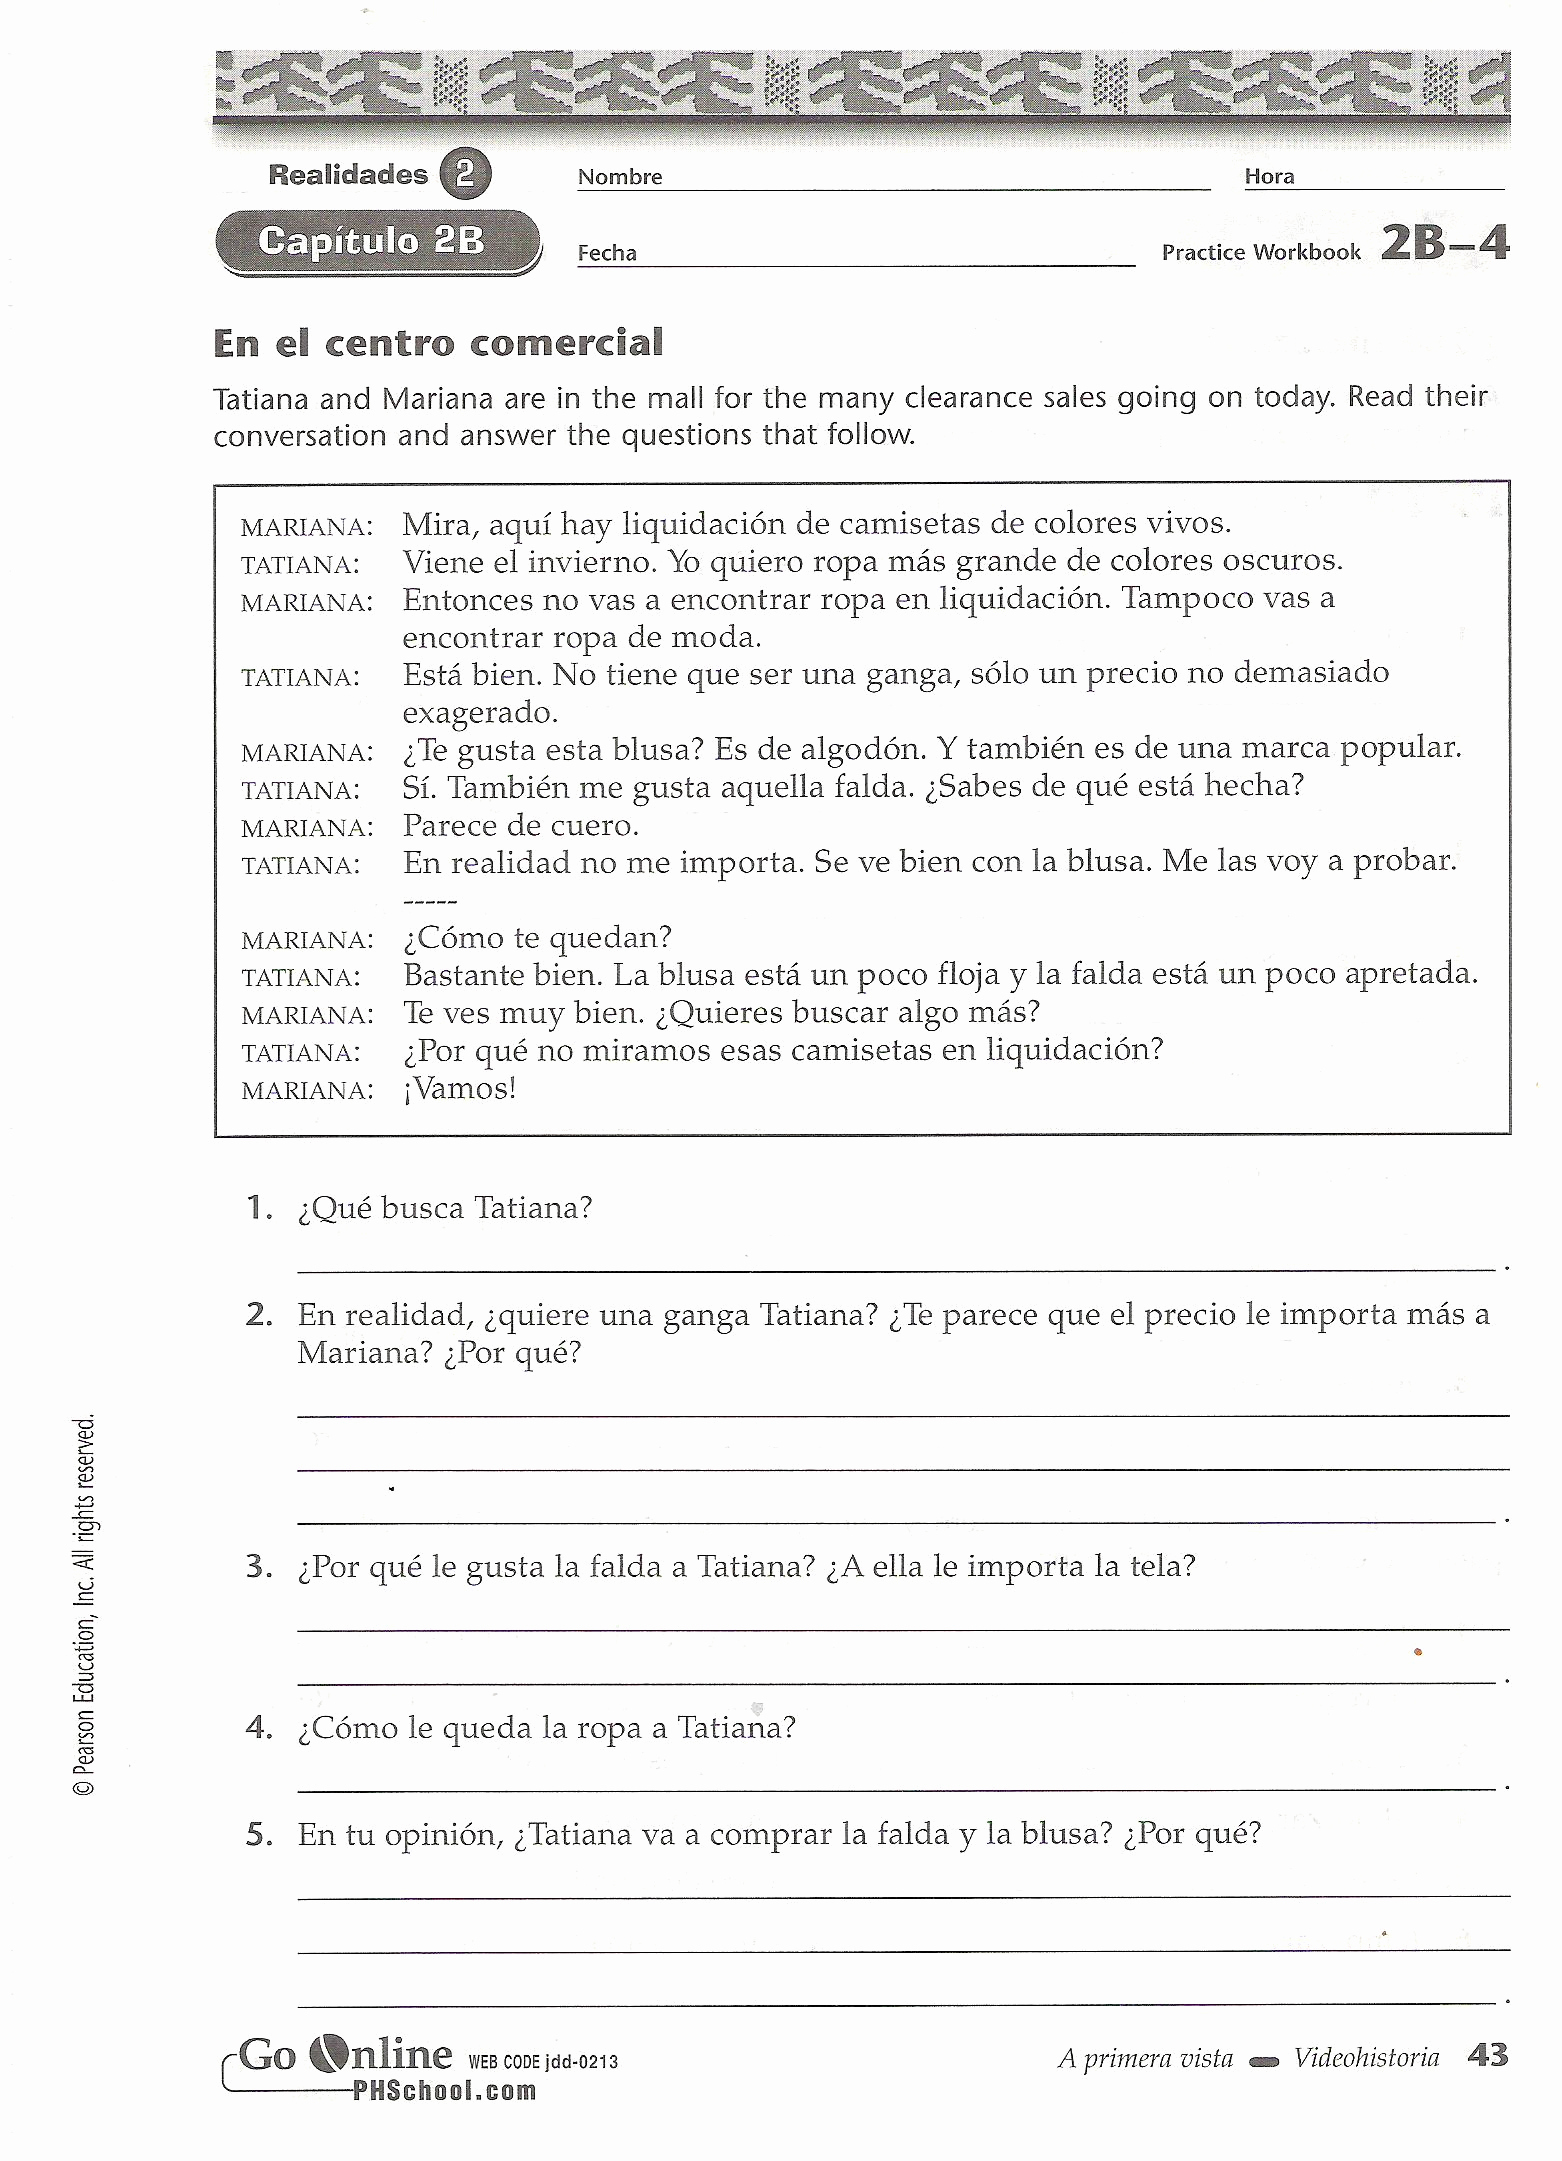 Spanish Reflexive Verbs Worksheet Printable Beautiful Spanish Reflexive Verbs Worksheet Printable